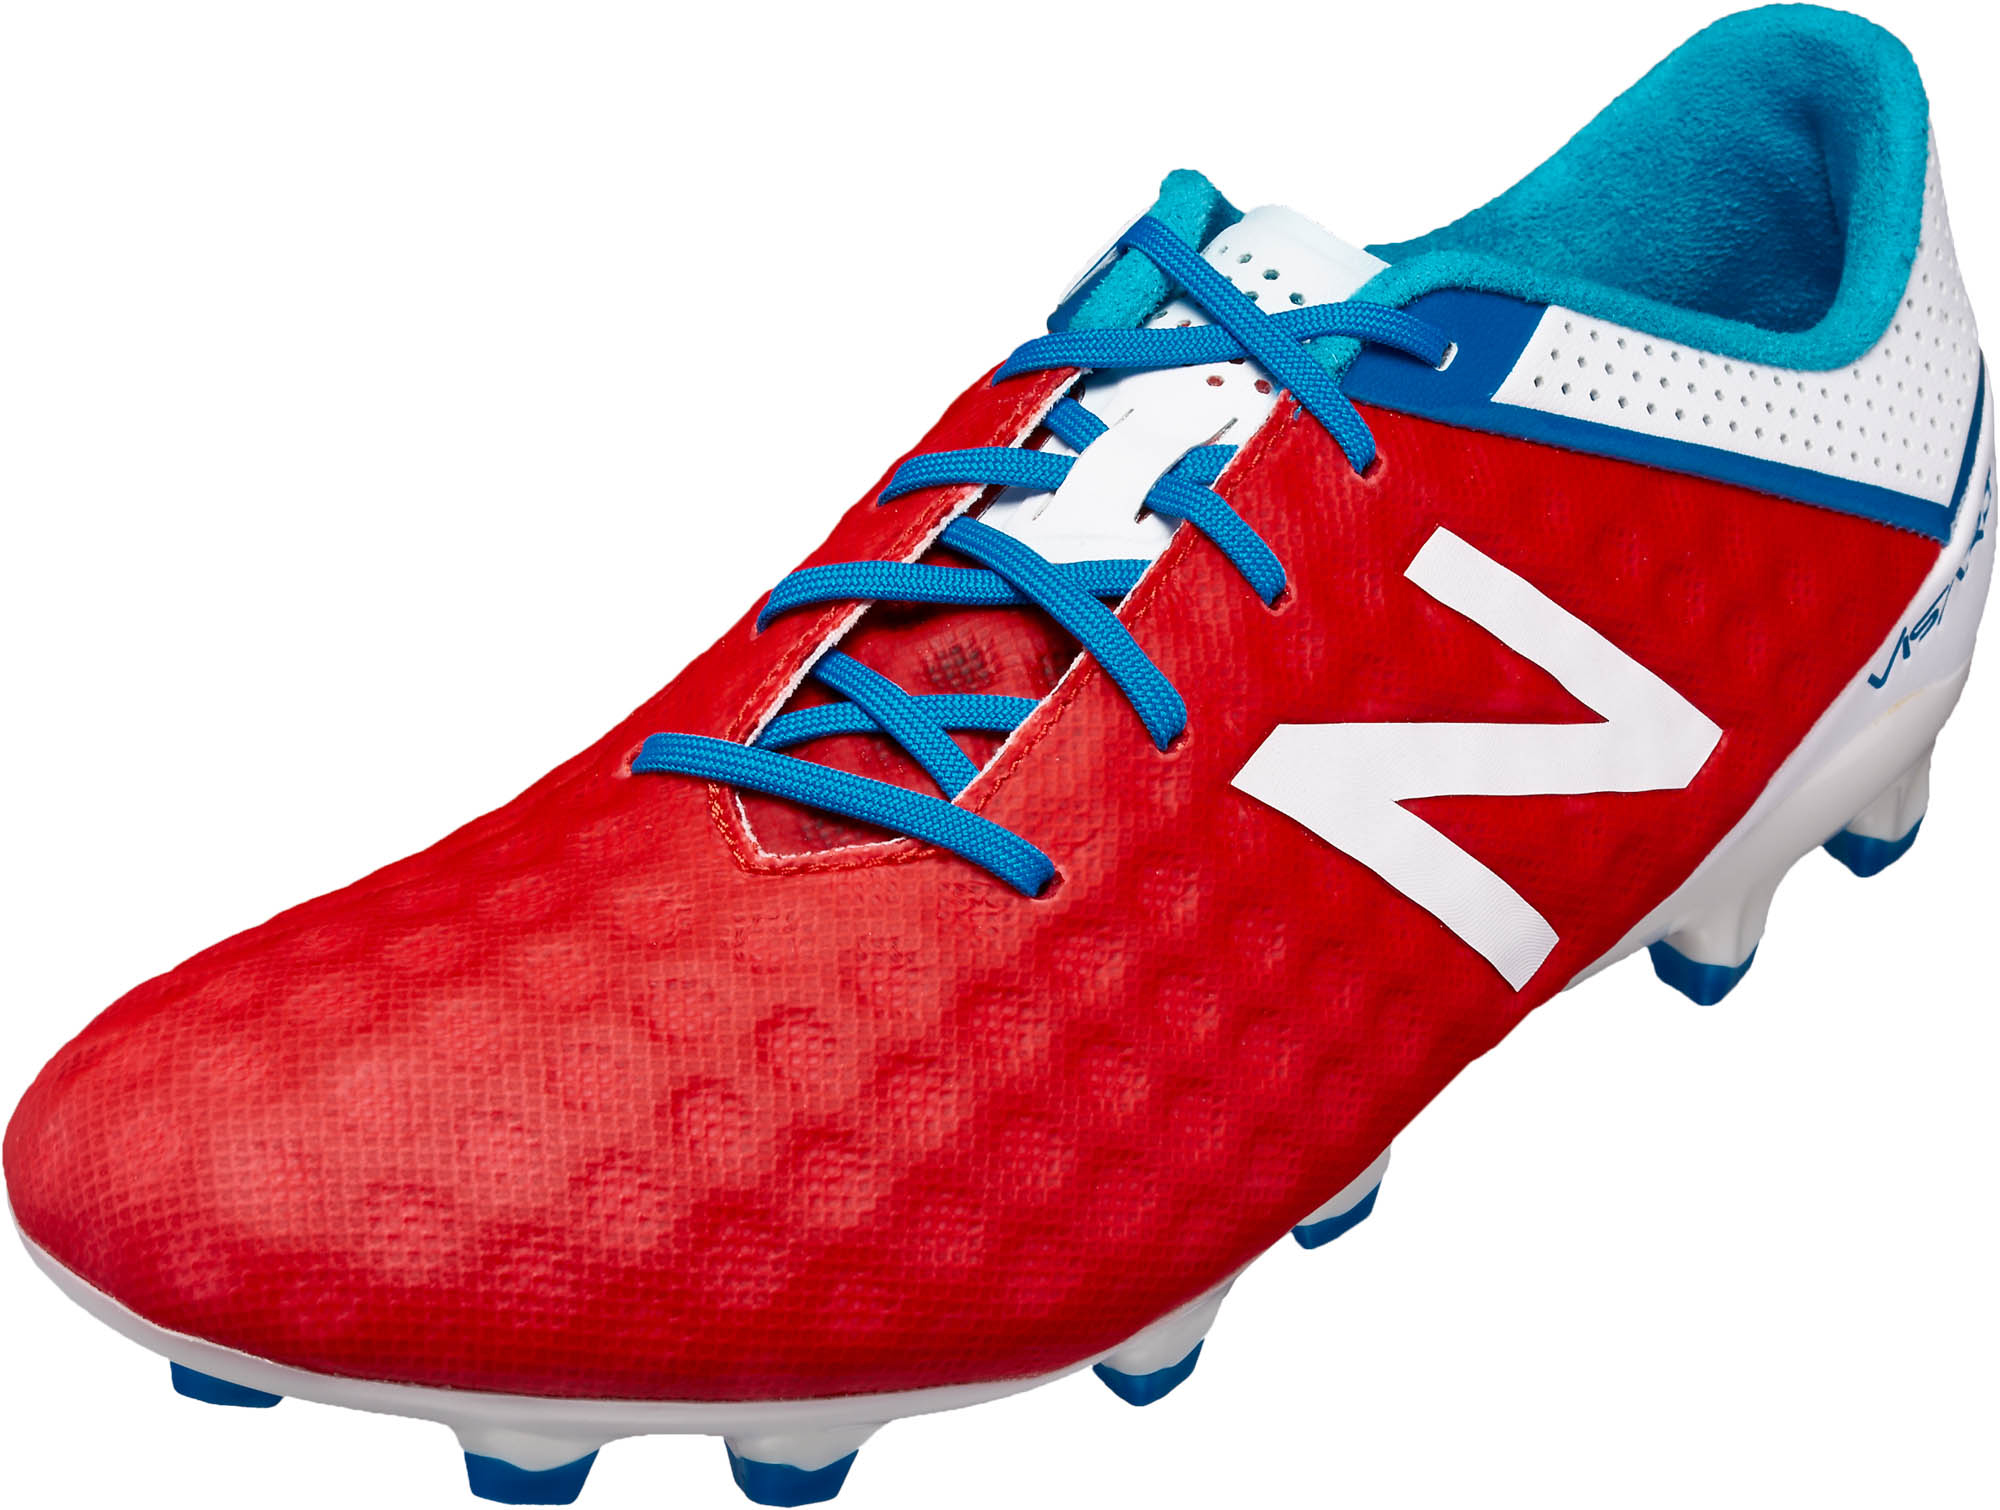 New Balance Visaro Pro FG - New Balance Soccer Shoes